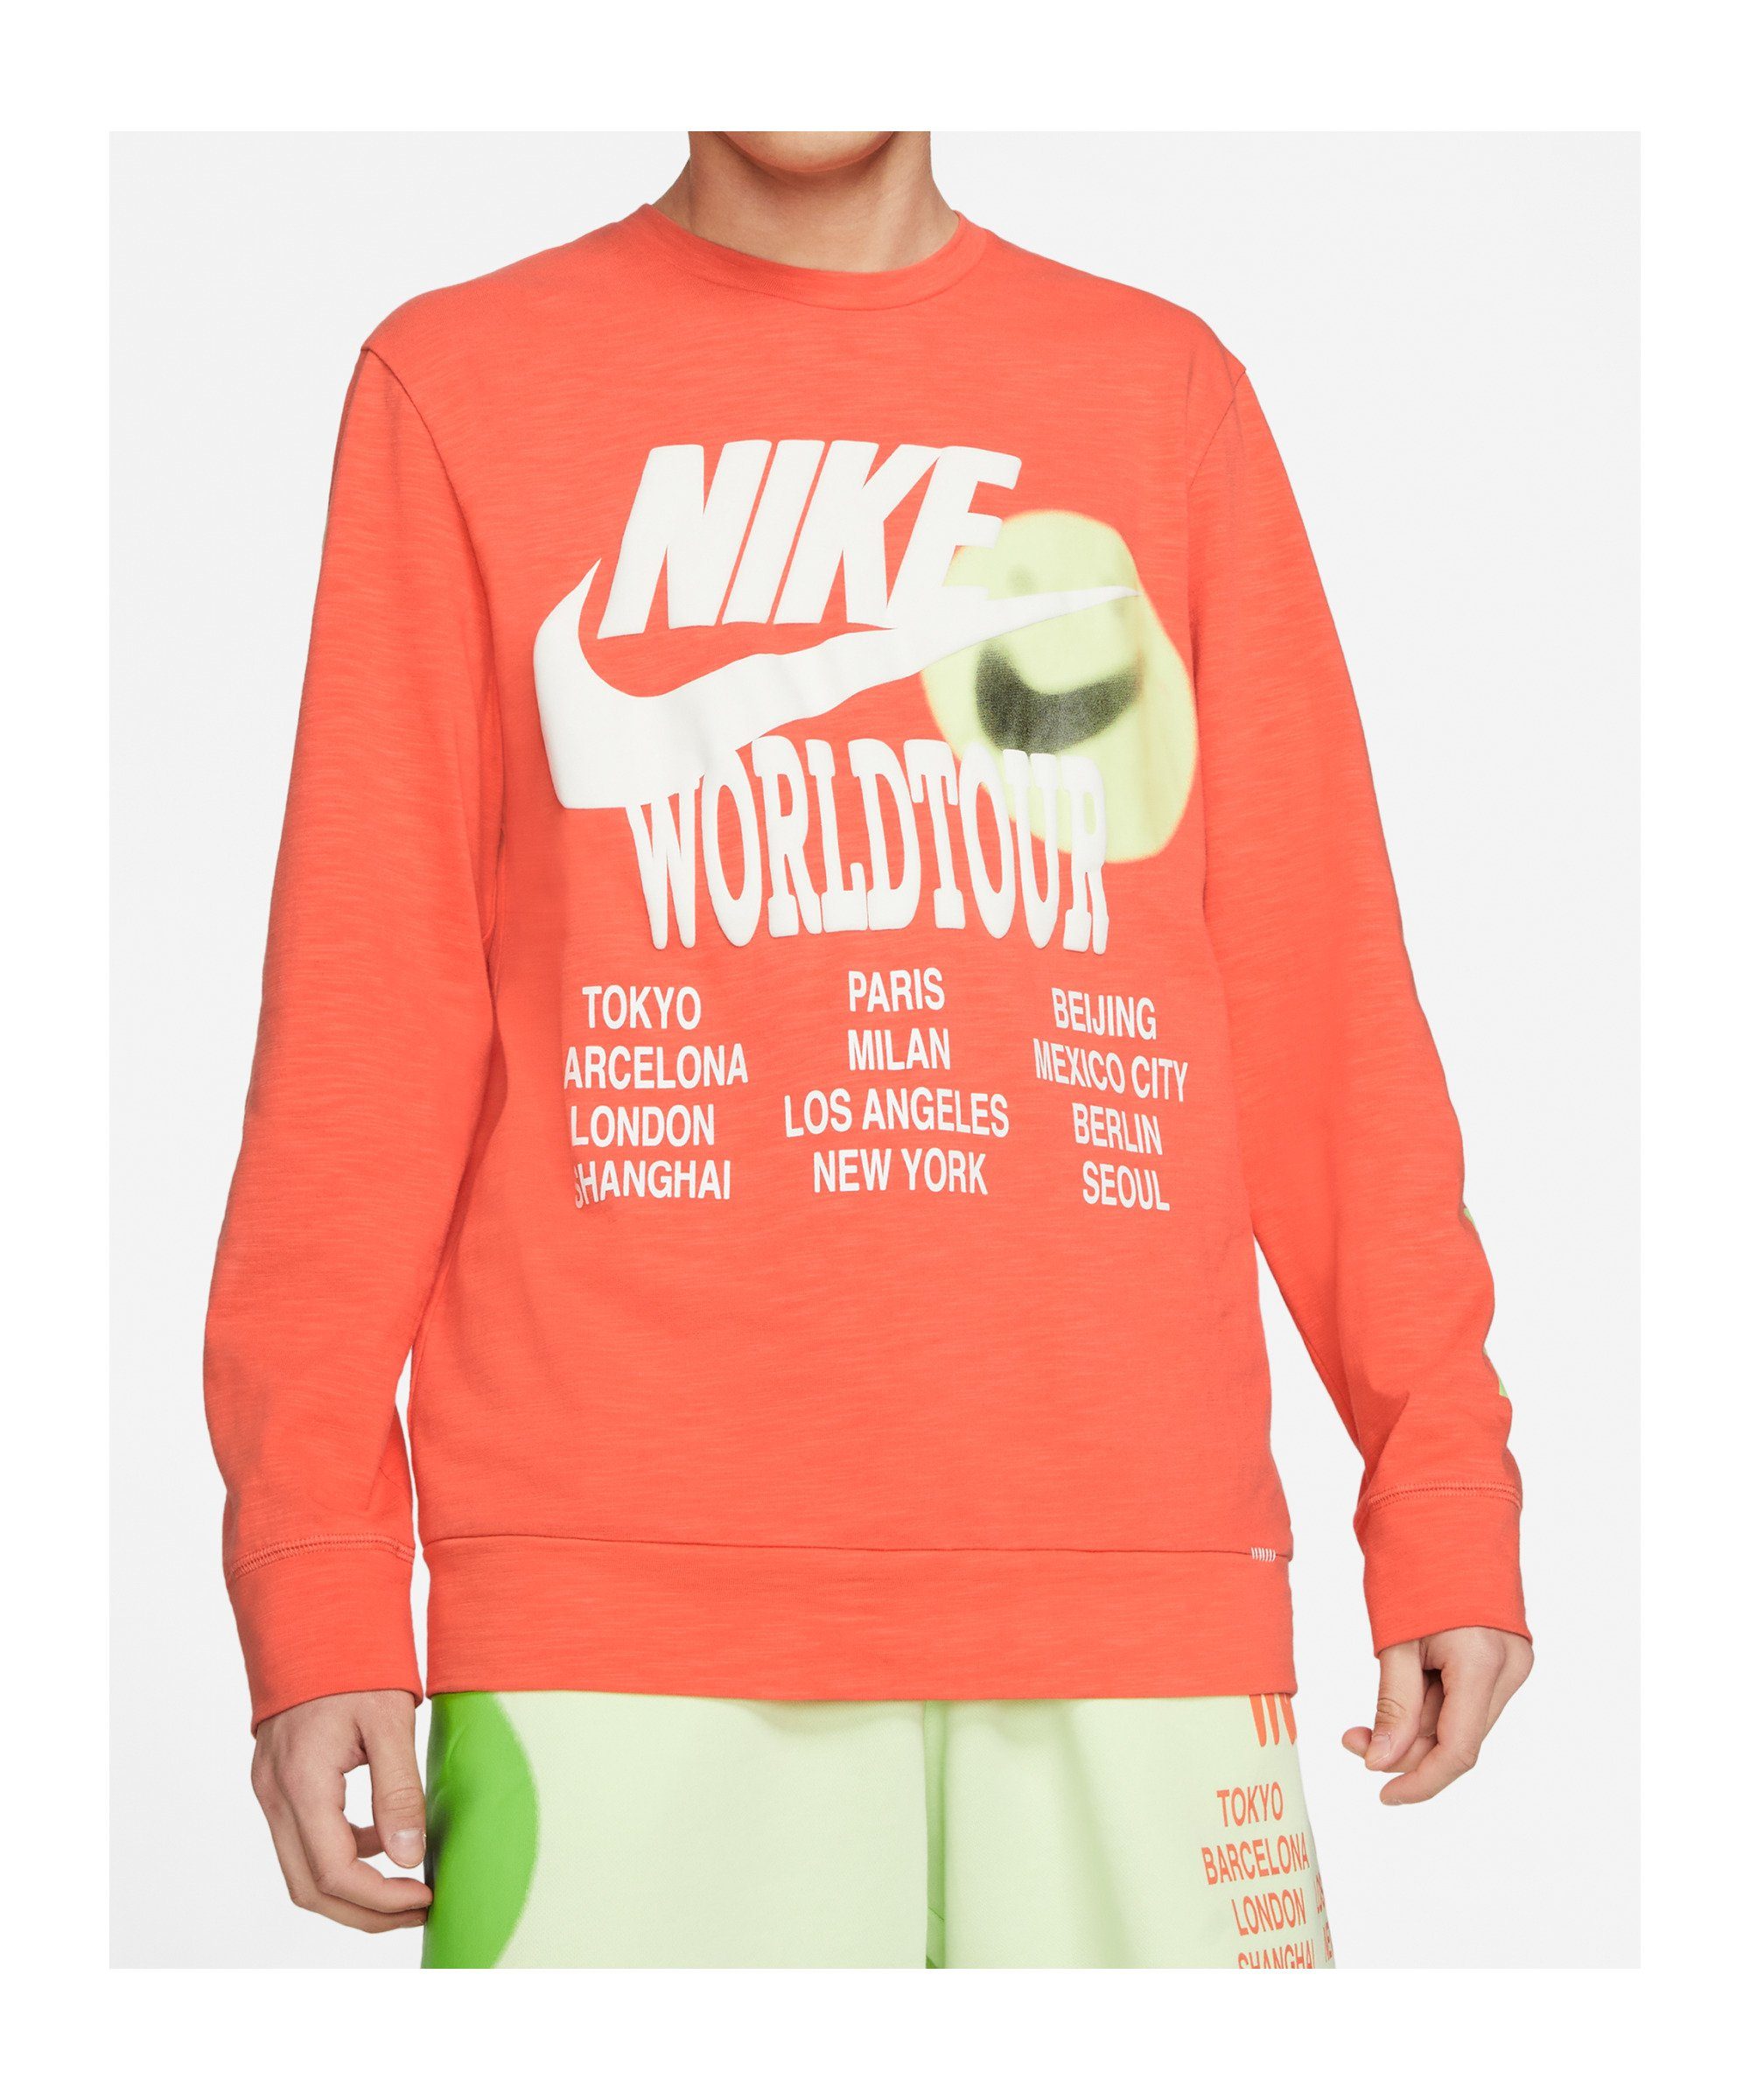 Tour Sweatshirt Nike Sweatshirt Sportswear orange World